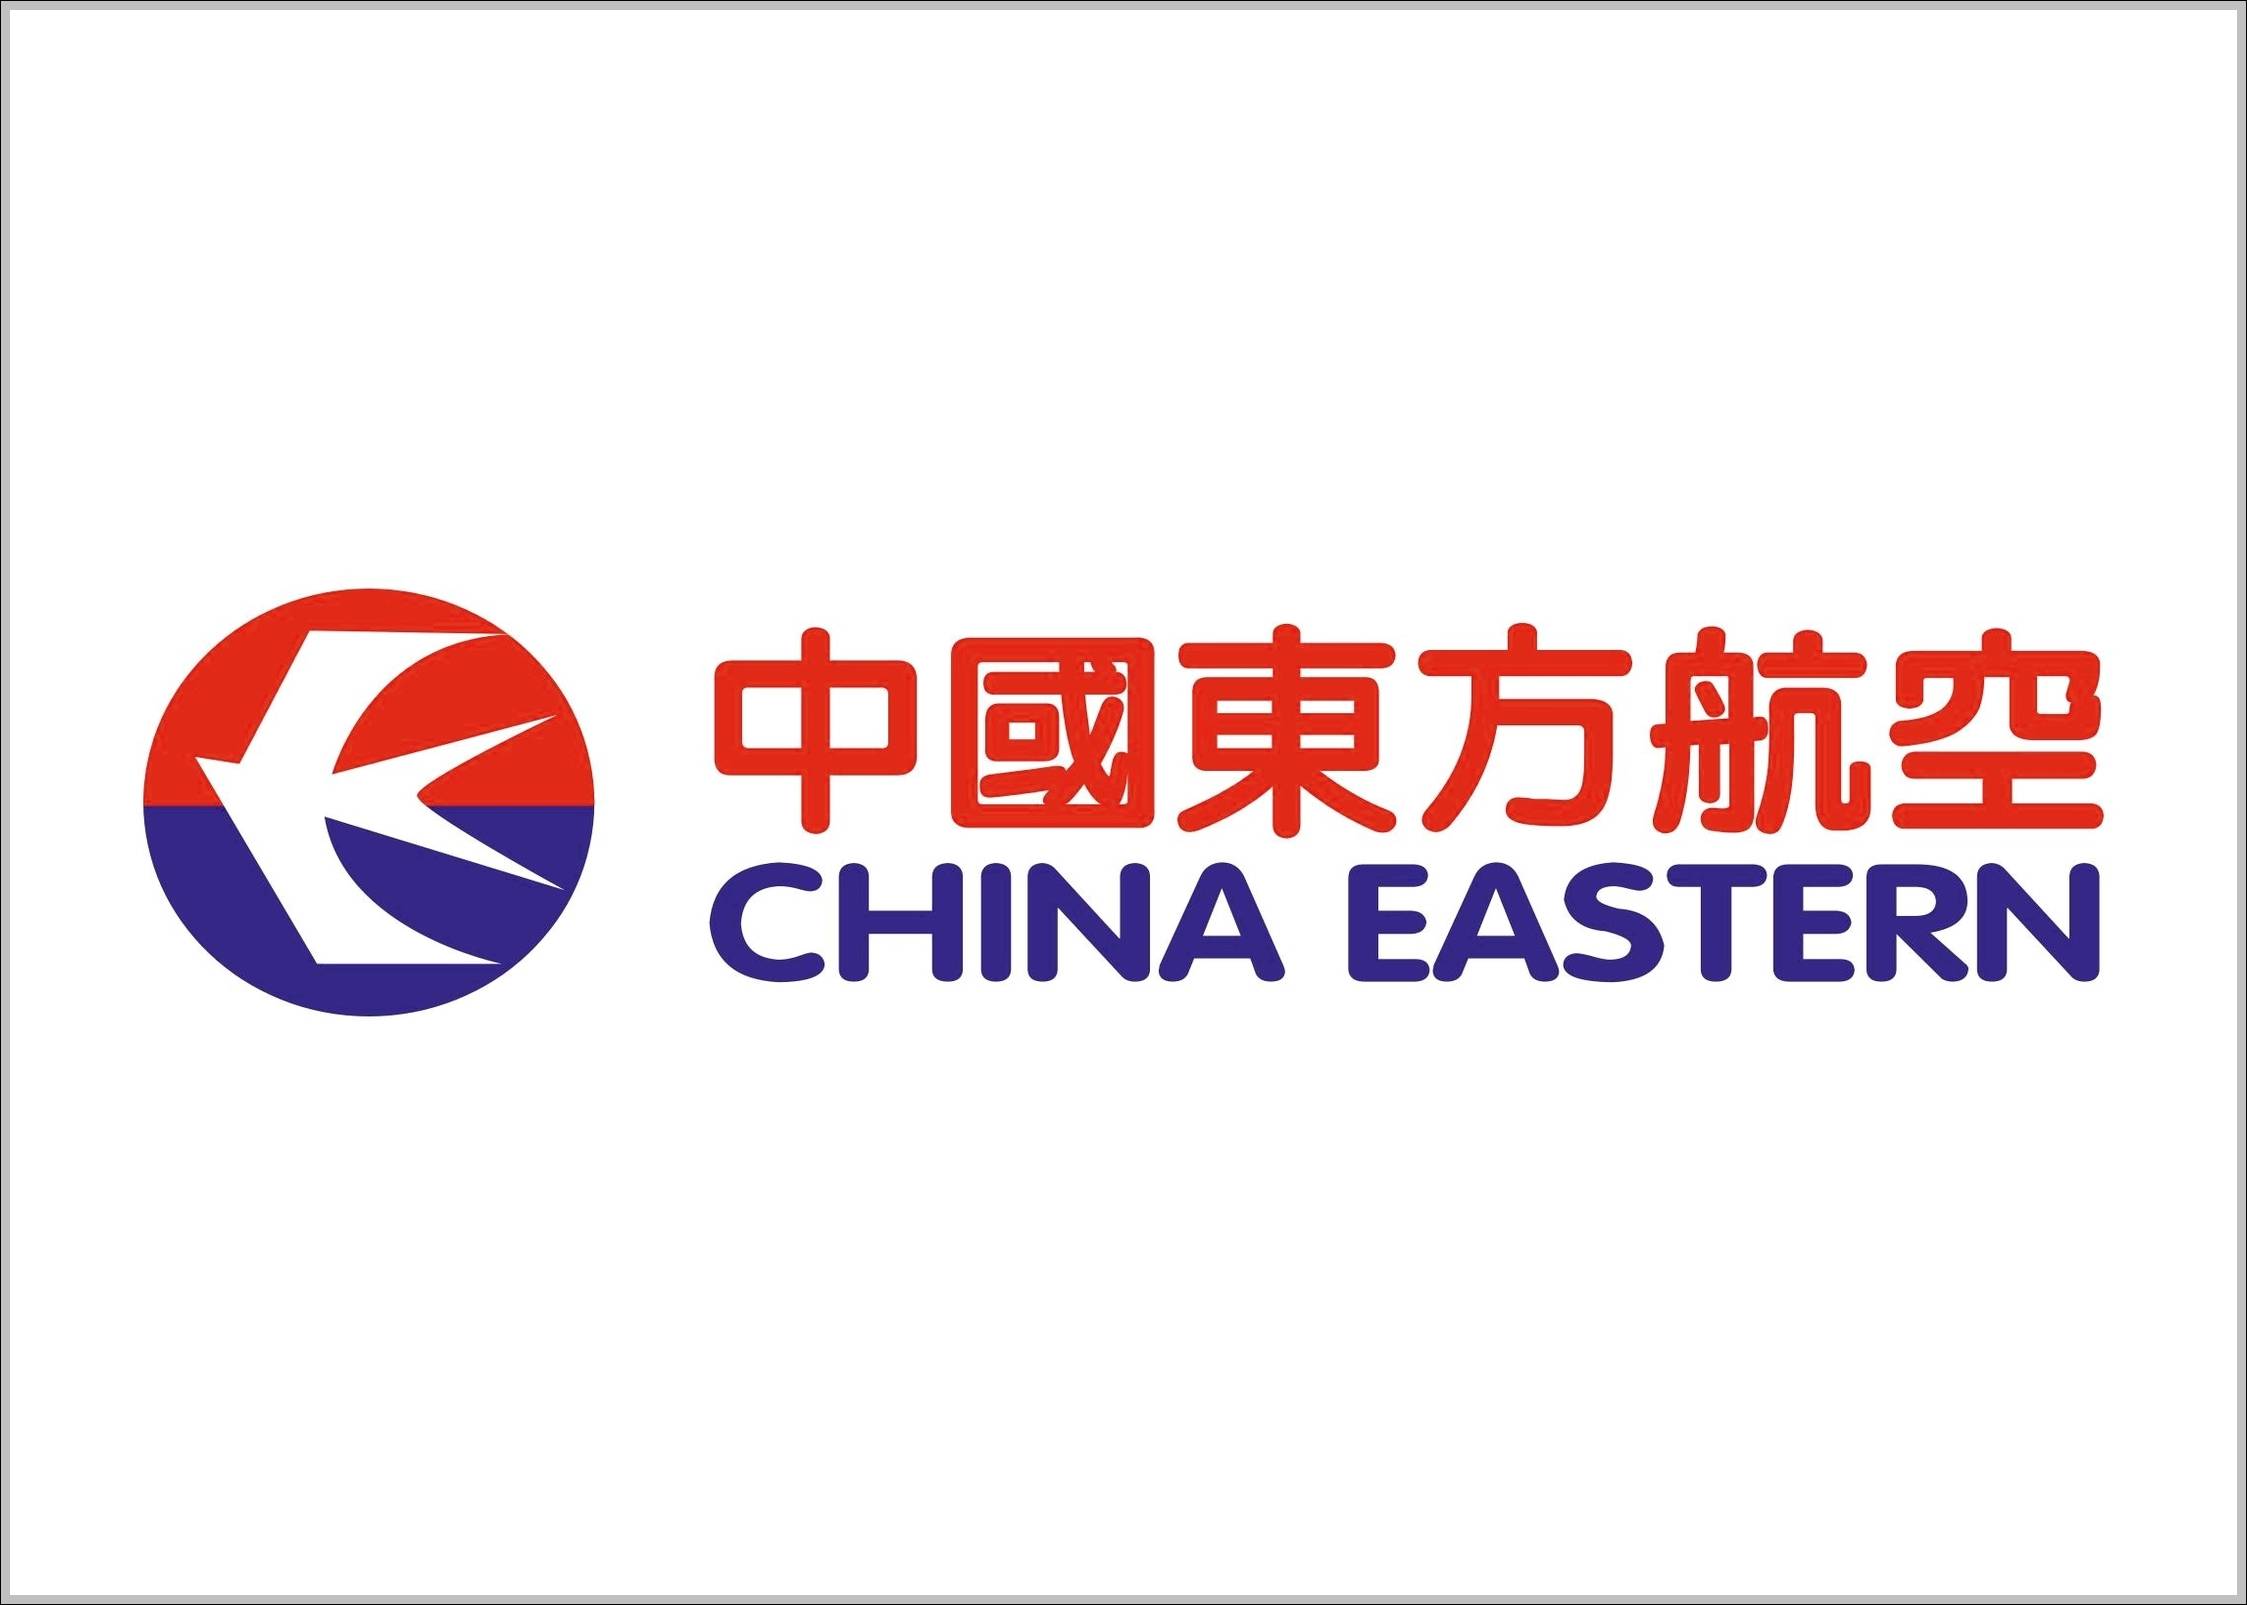 China Eastern logo old